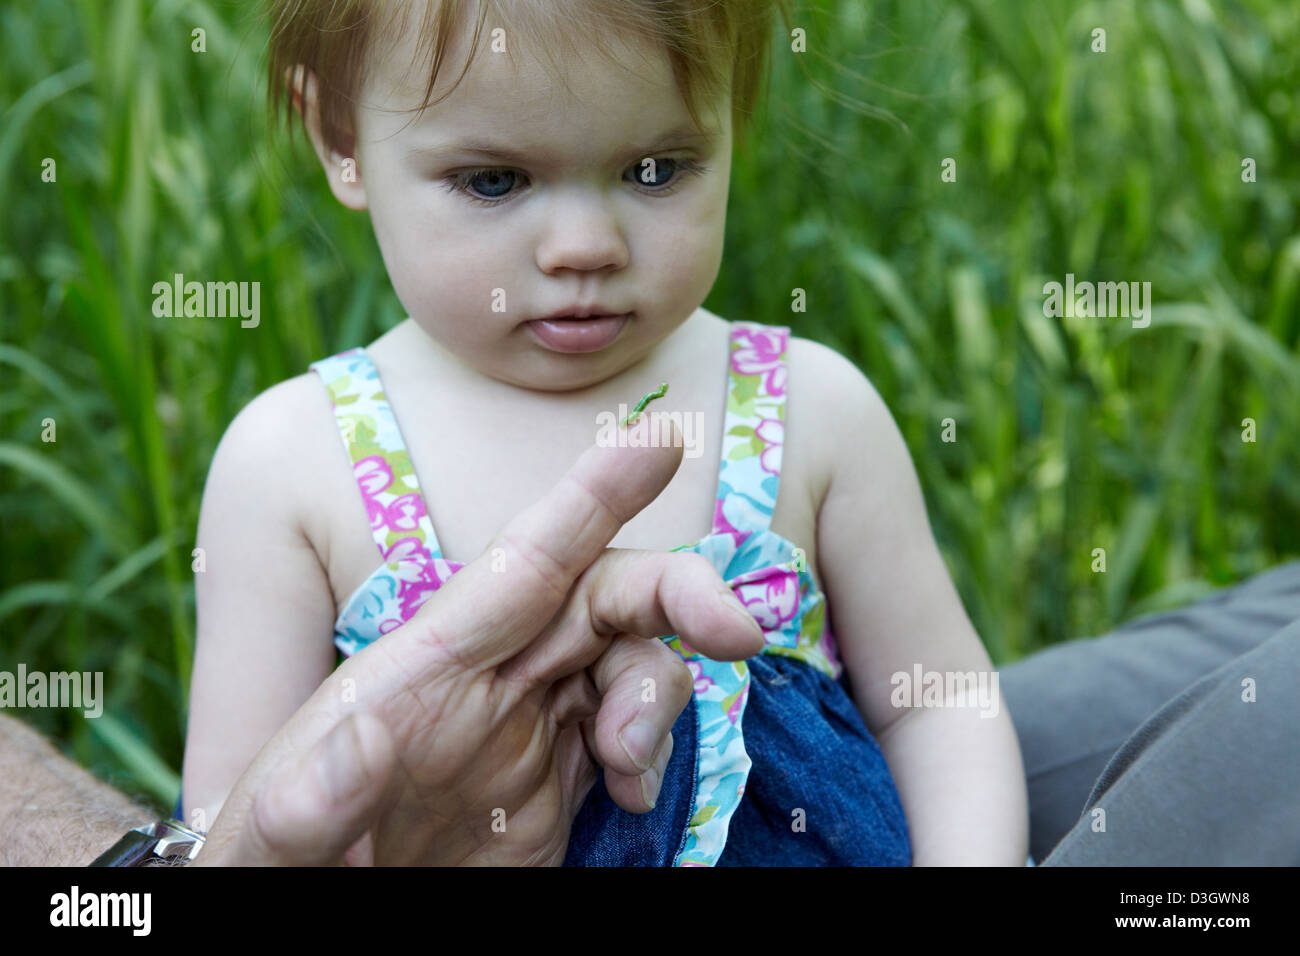 1 year old girl looks at green caterpillar Stock Photo